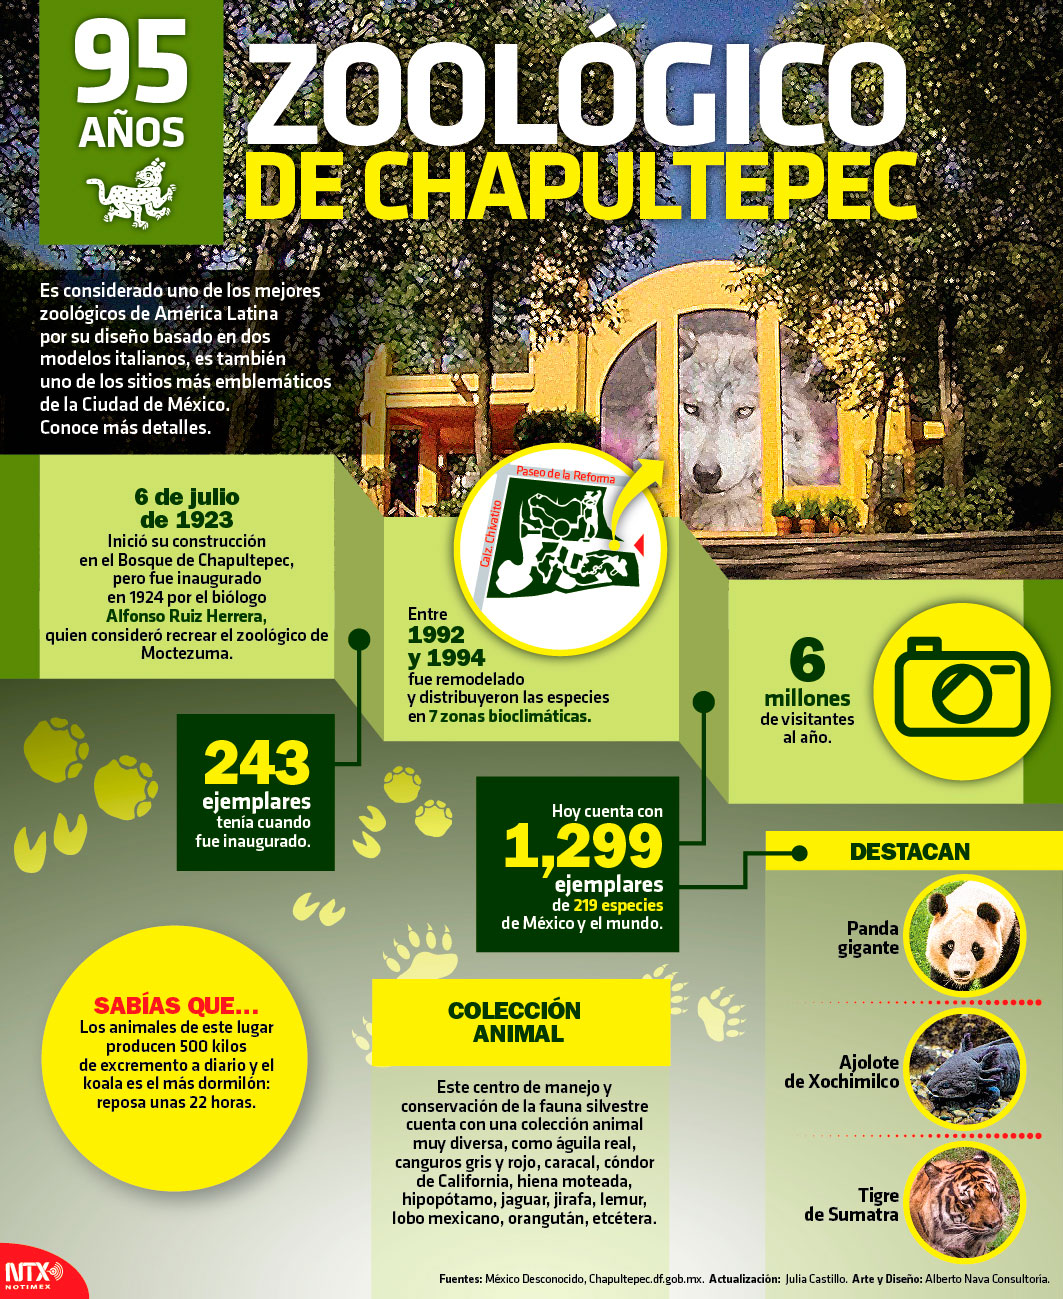 Zoolgico de Chapultepec